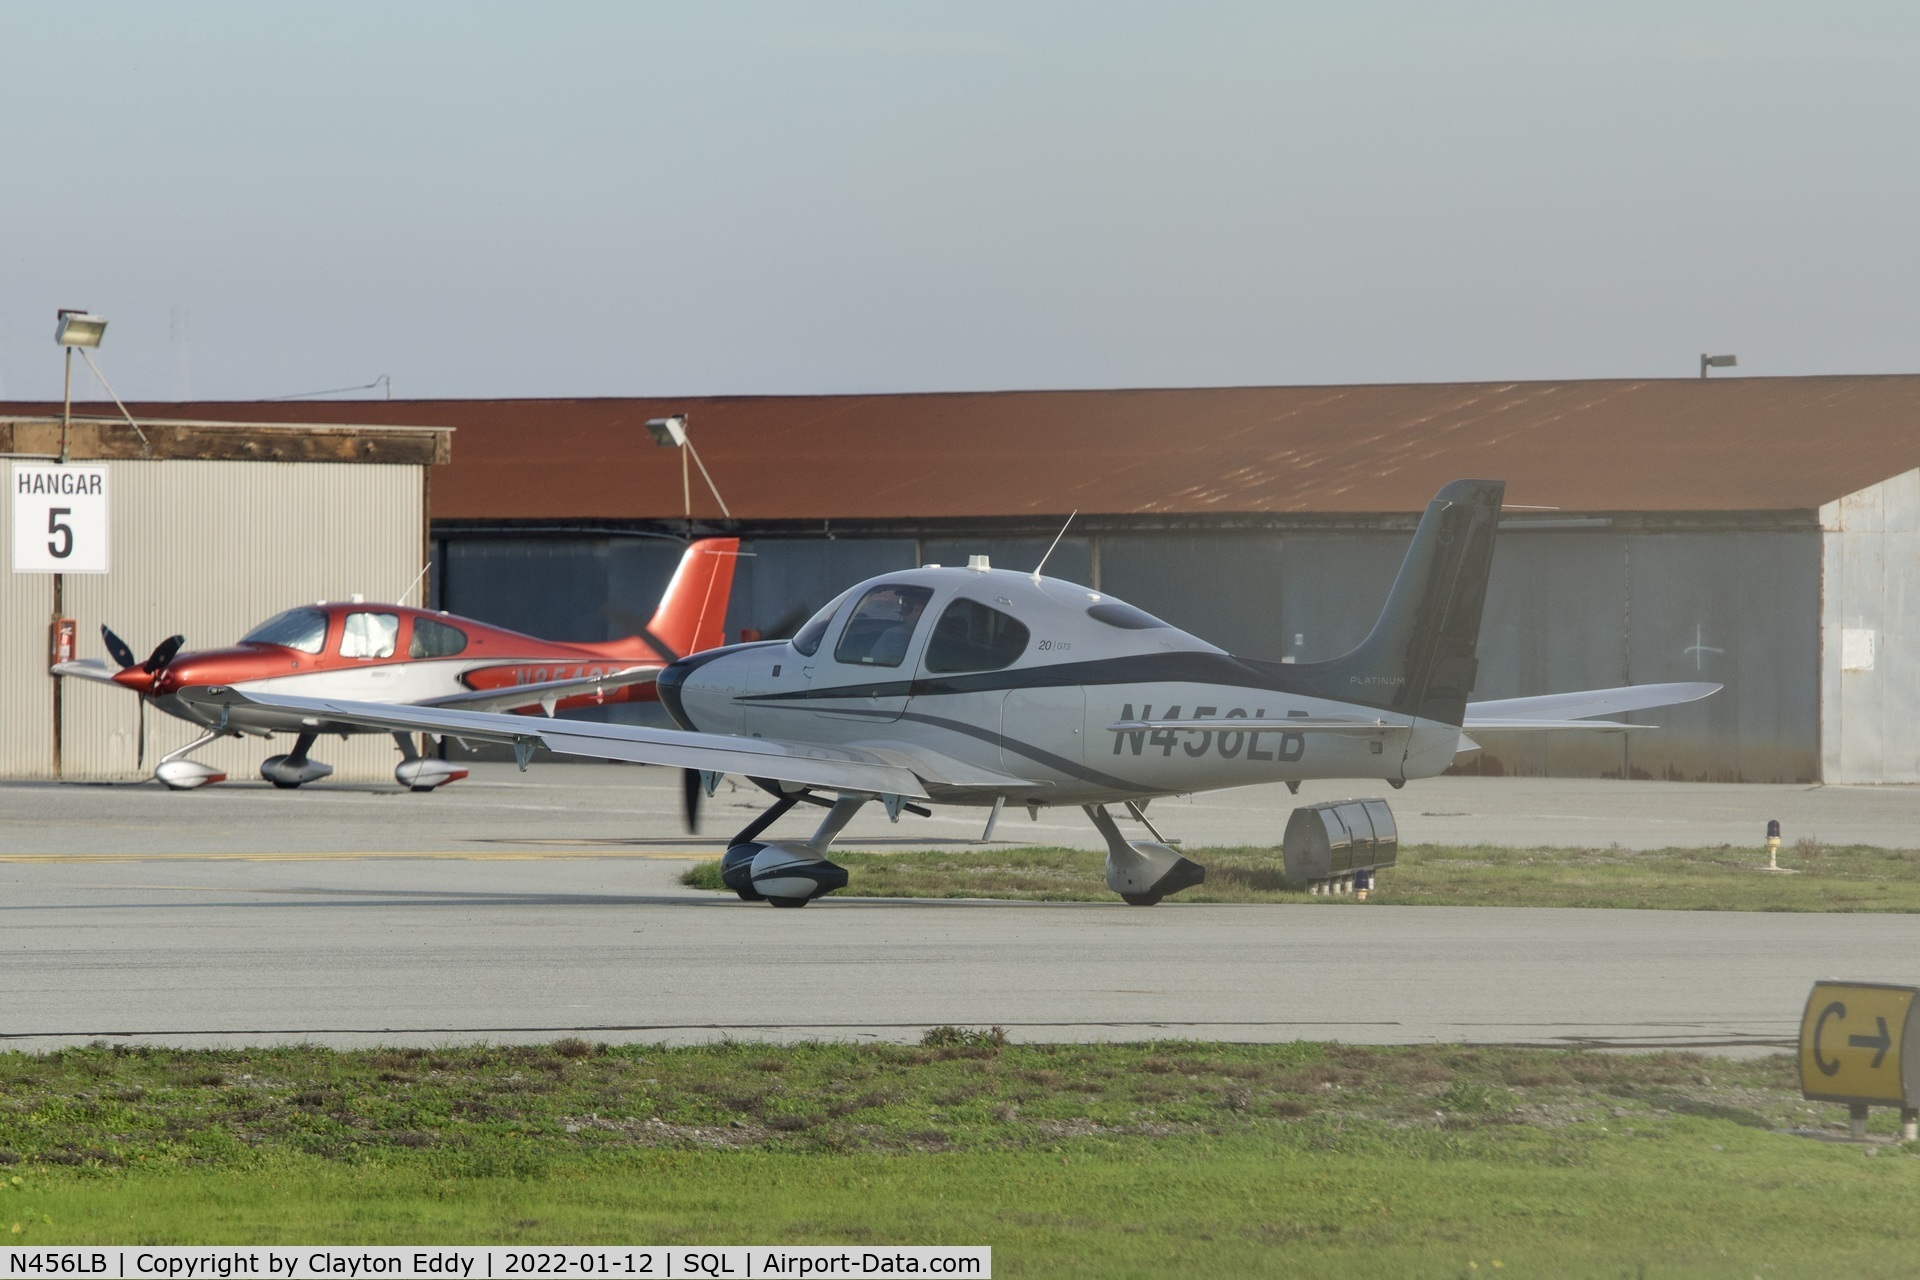 N456LB, 2014 Cirrus SR20 C/N 2256, San Carlos Airport in California 2022.